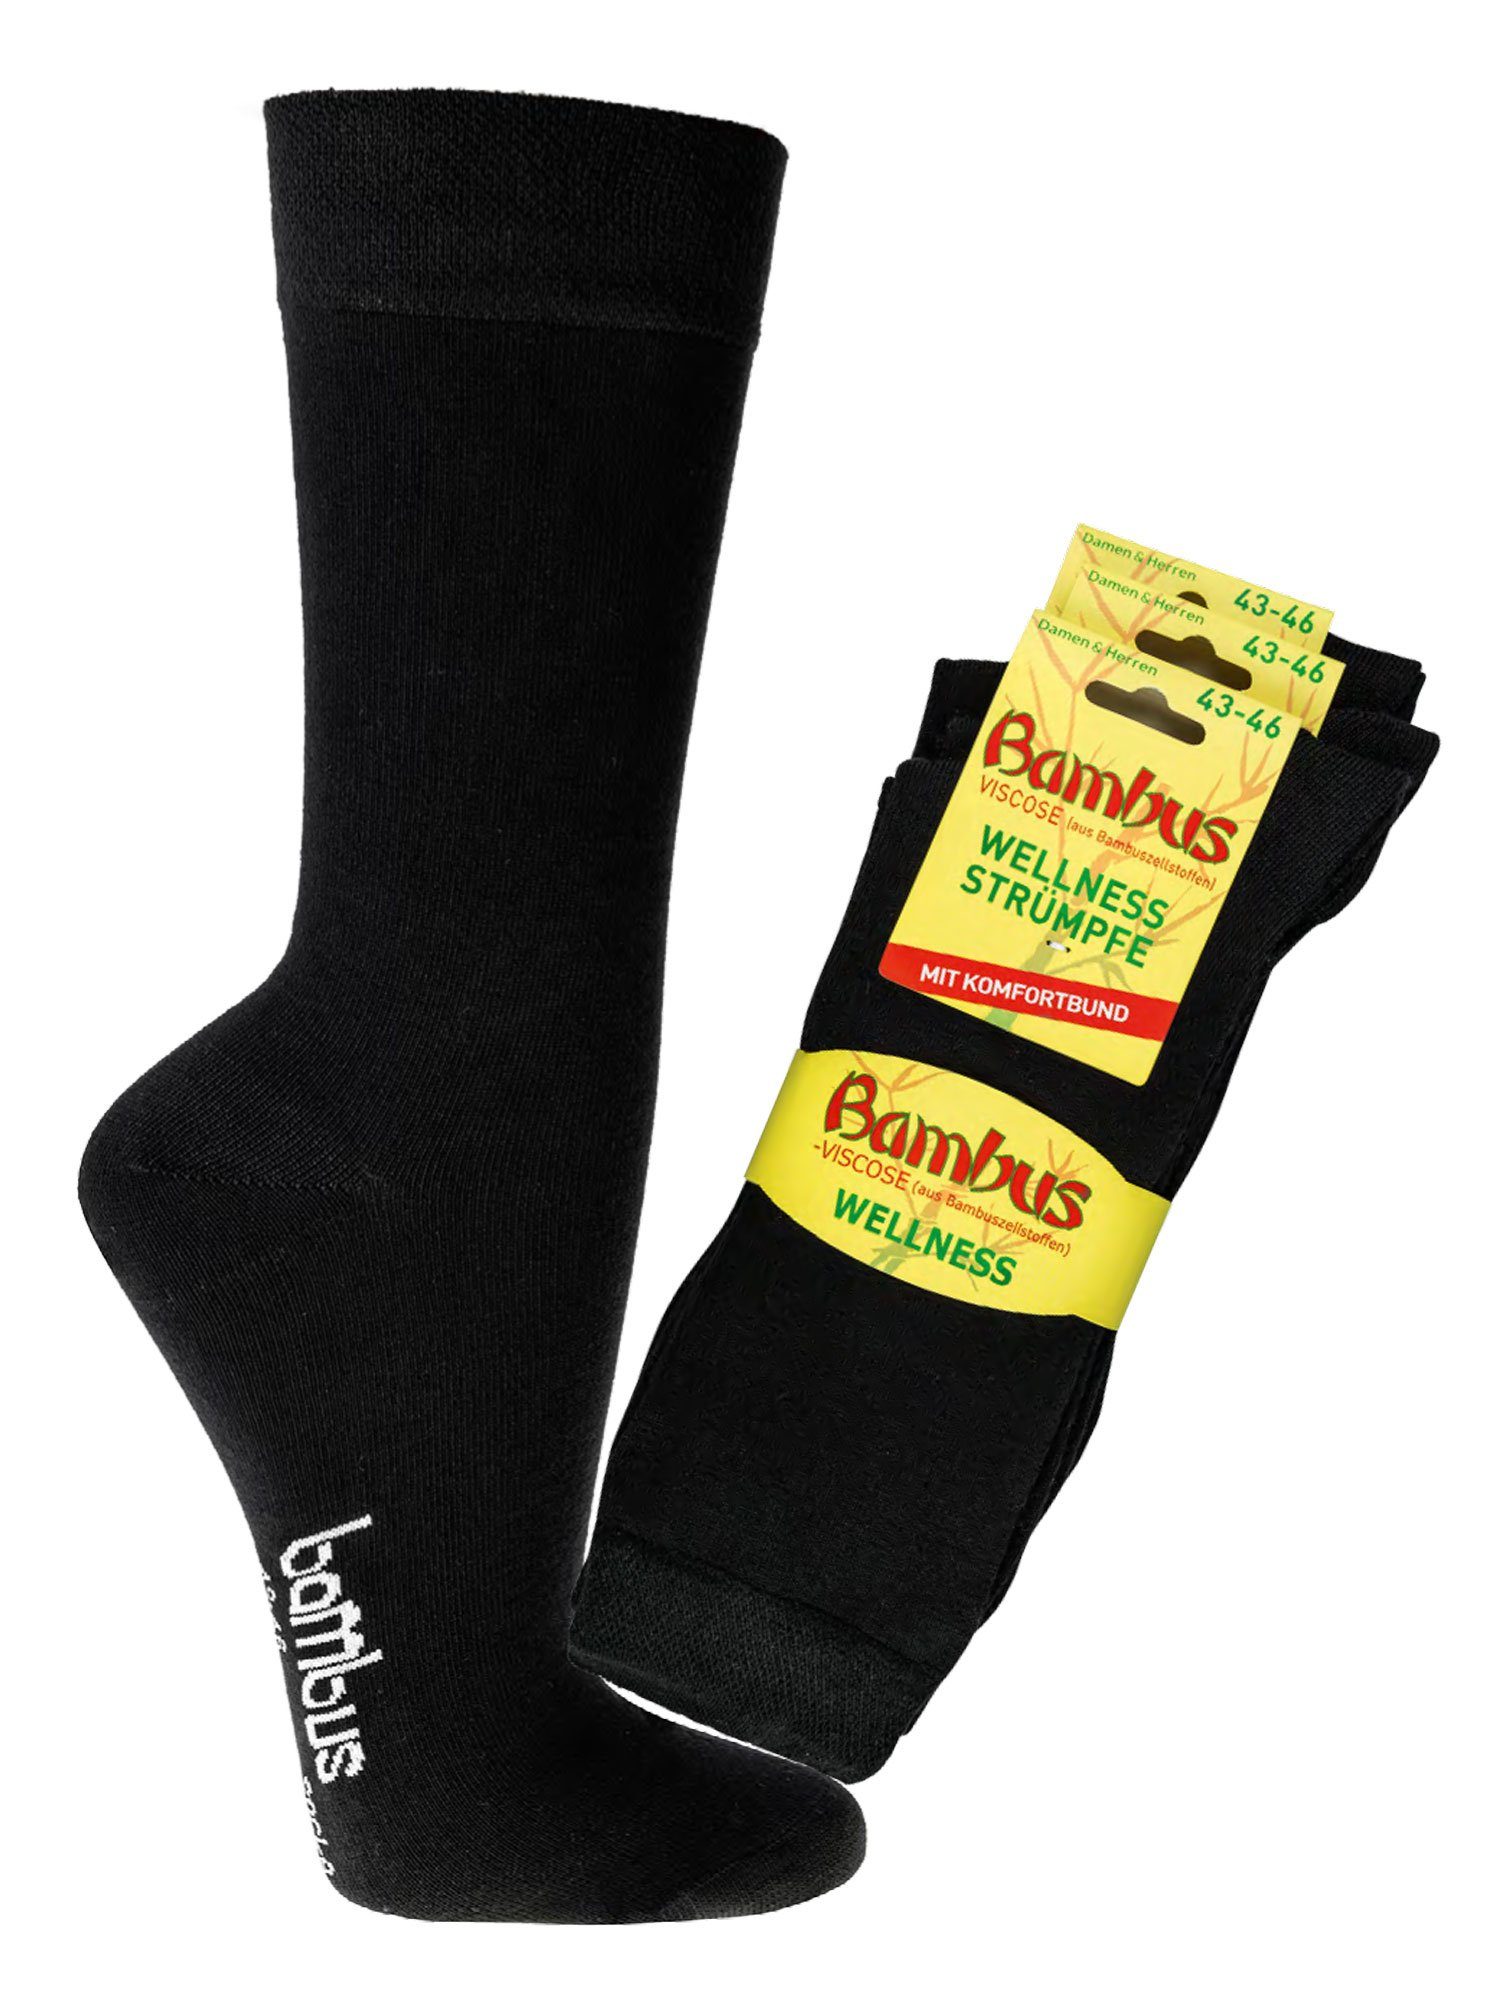 Wowerat Basicsocken Bambus Viskose Socken verstärkt für längere Haltbarkeit Damen Herren verstärkt gestrickt | Socken